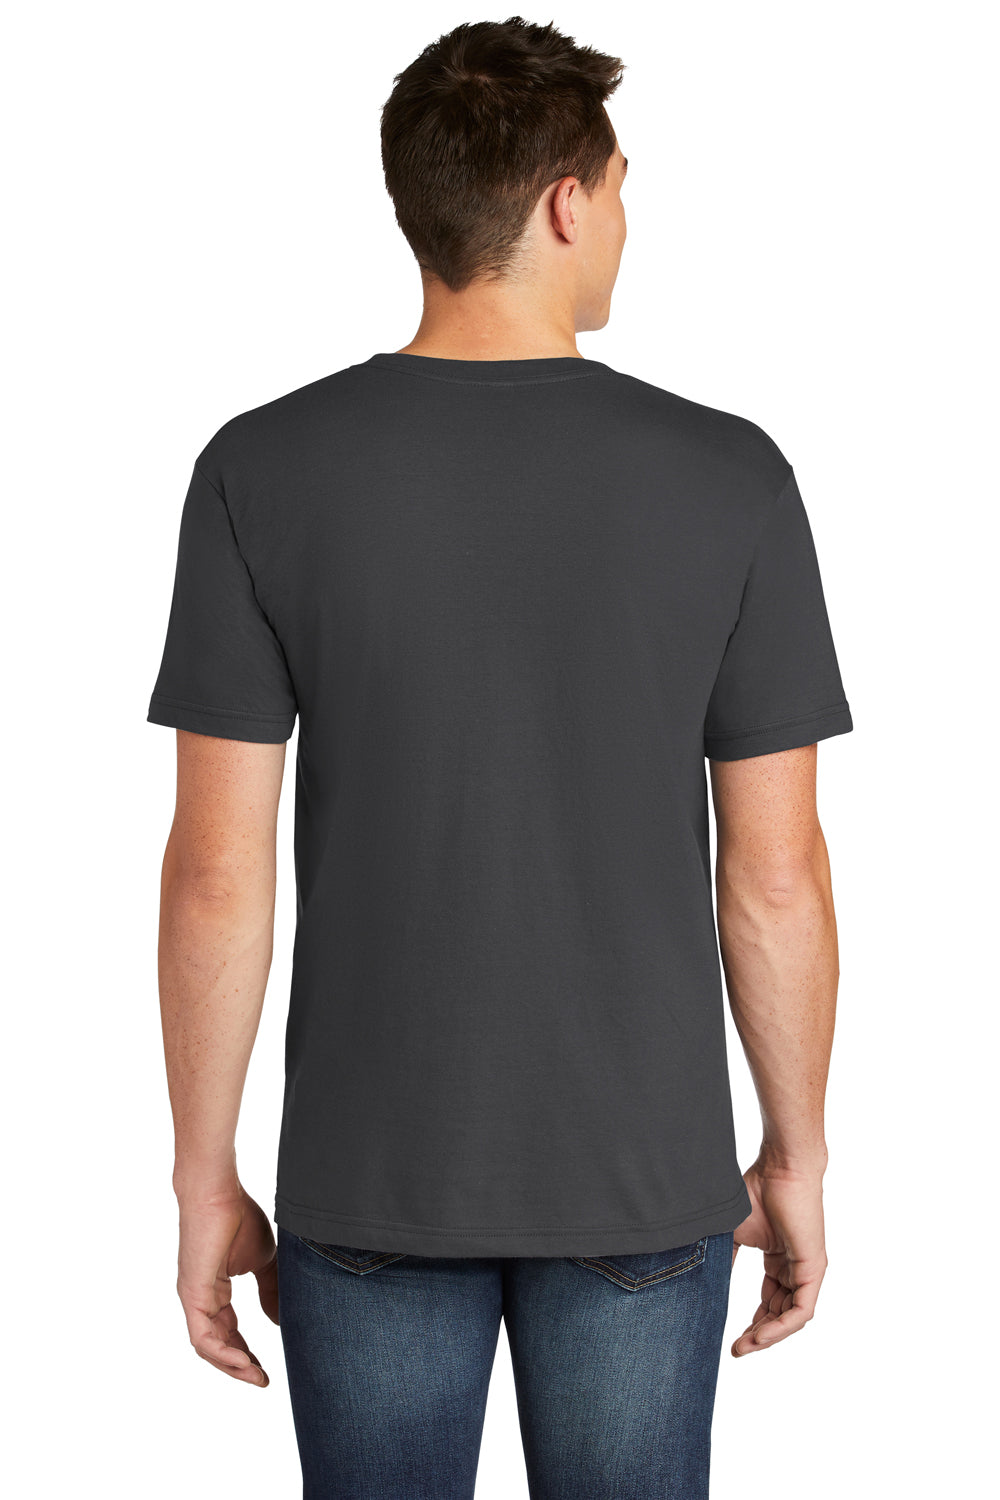 American Apparel Mens Fine Jersey Short Sleeve V-Neck T-Shirt Asphalt Grey Side